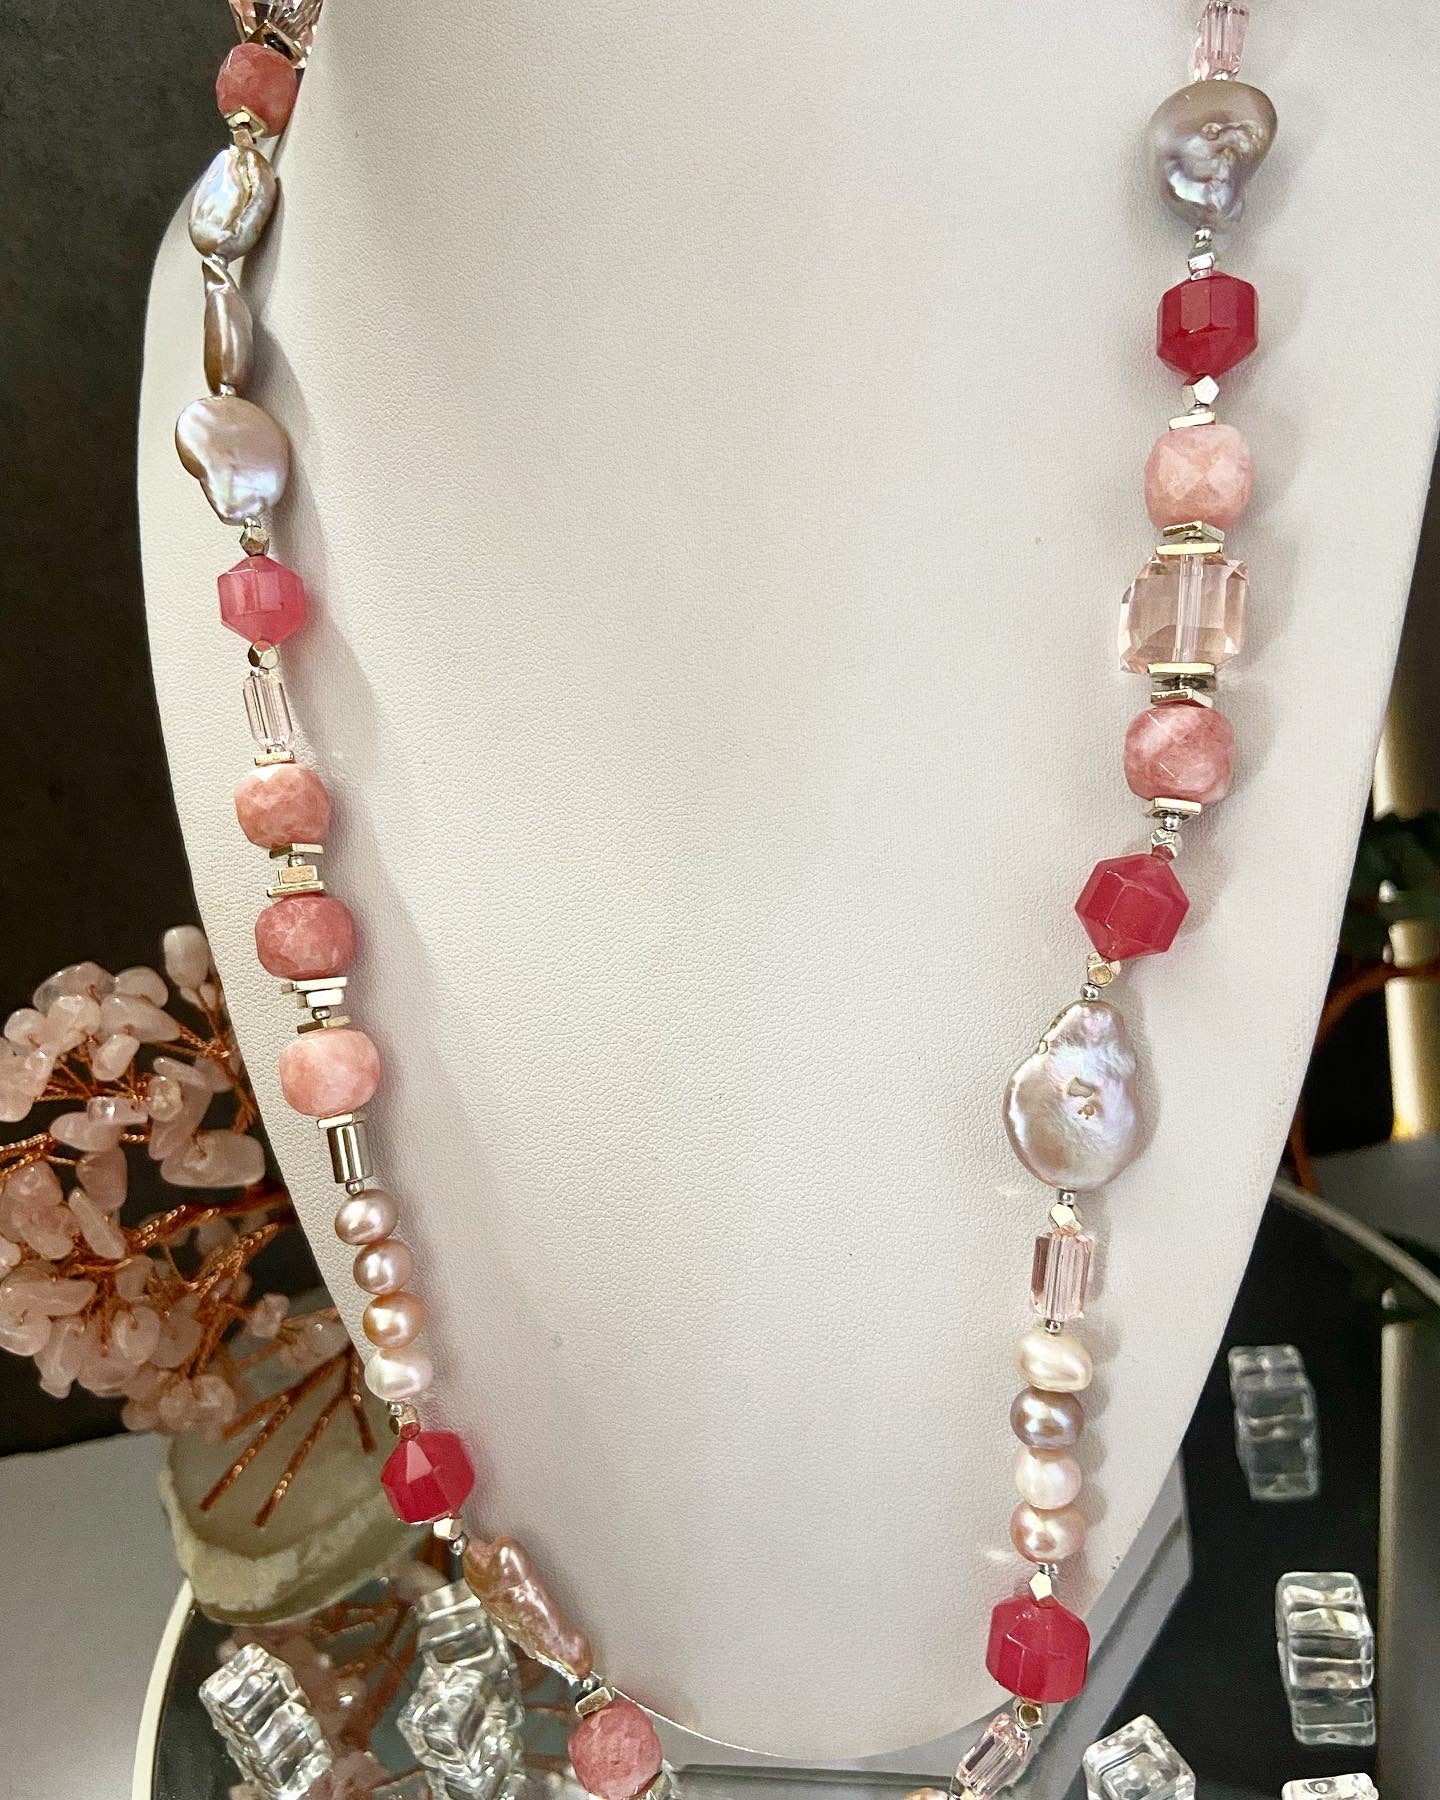 Beads with pearls, quartzite, chalcedony, hematite, jewelry glass